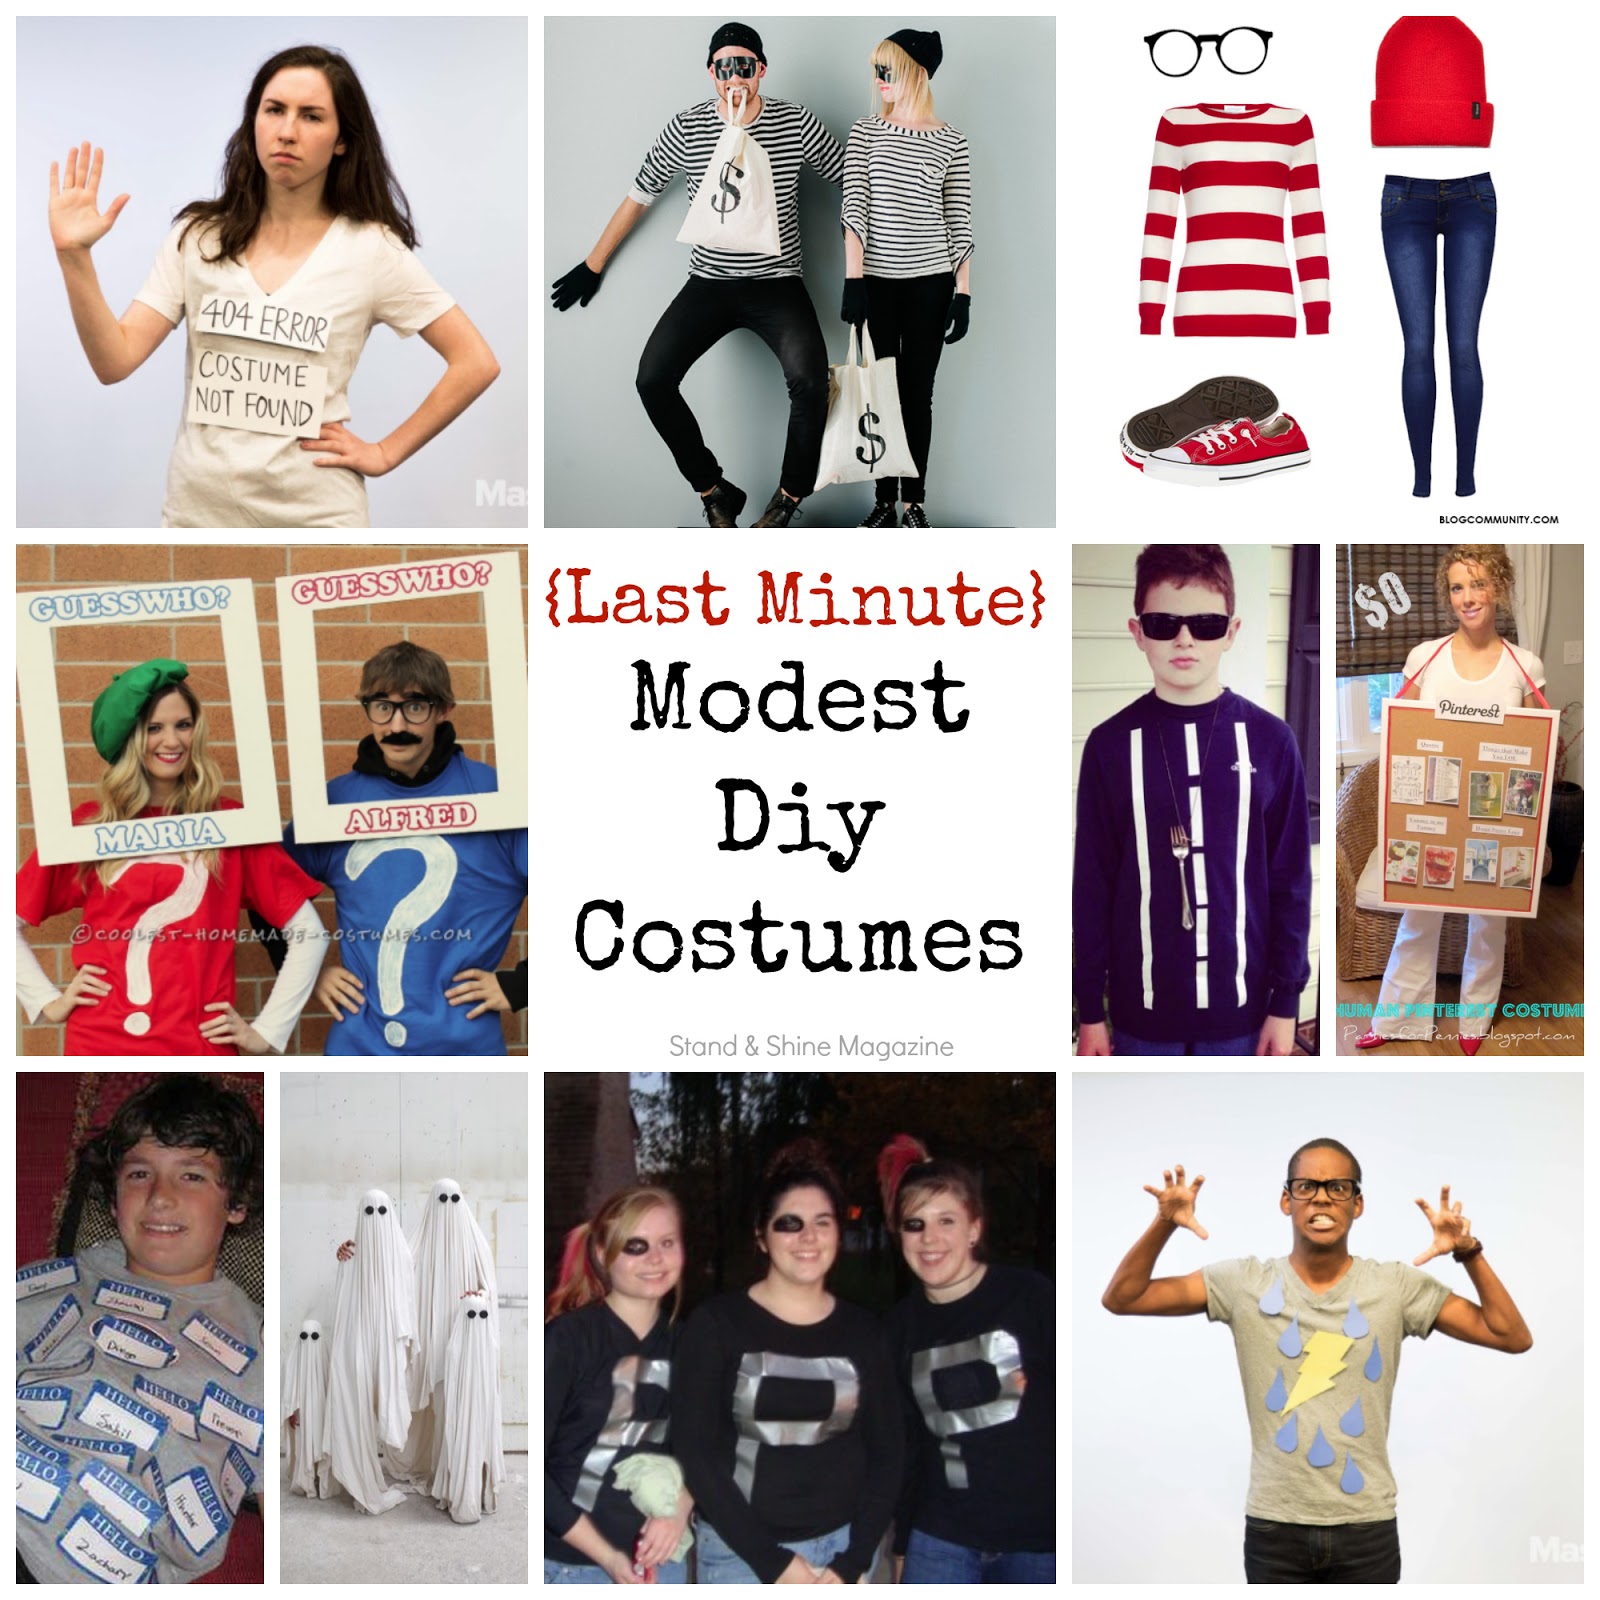 Stand & Shine Magazine: (Last-Minute) Modest DIY Halloween Costumes